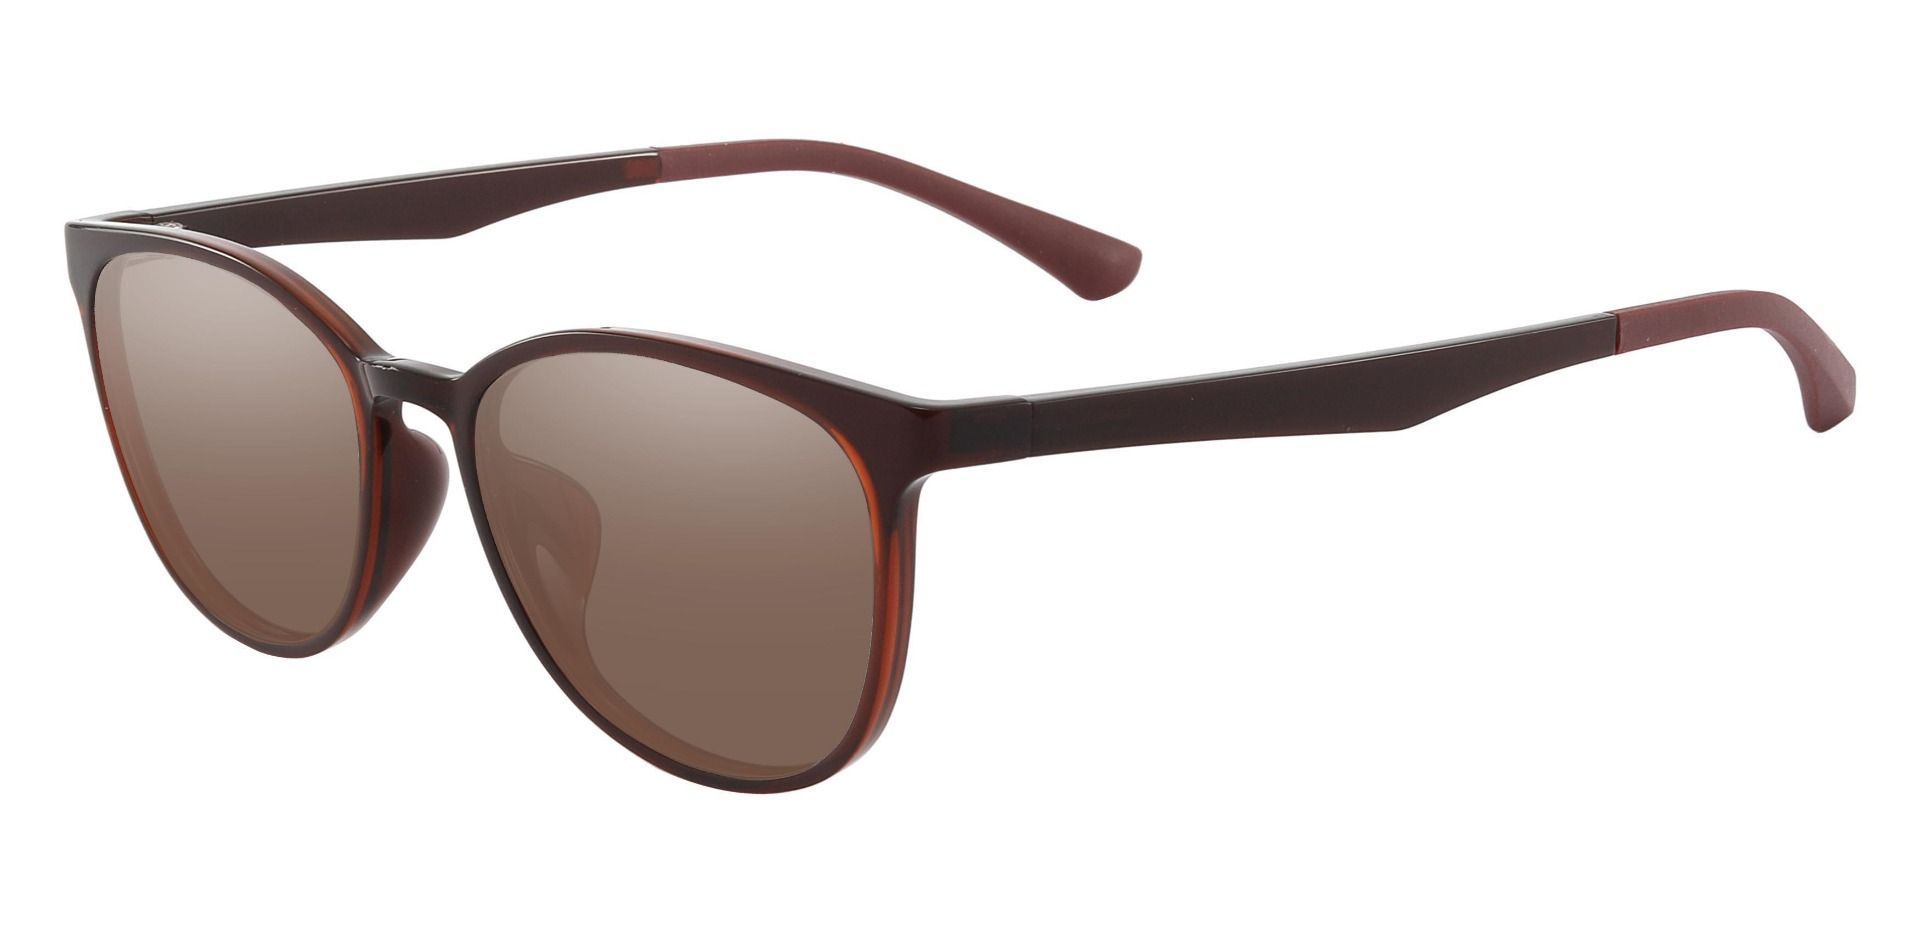 Pembroke Oval Progressive Sunglasses - Brown Frame With Brown Lenses